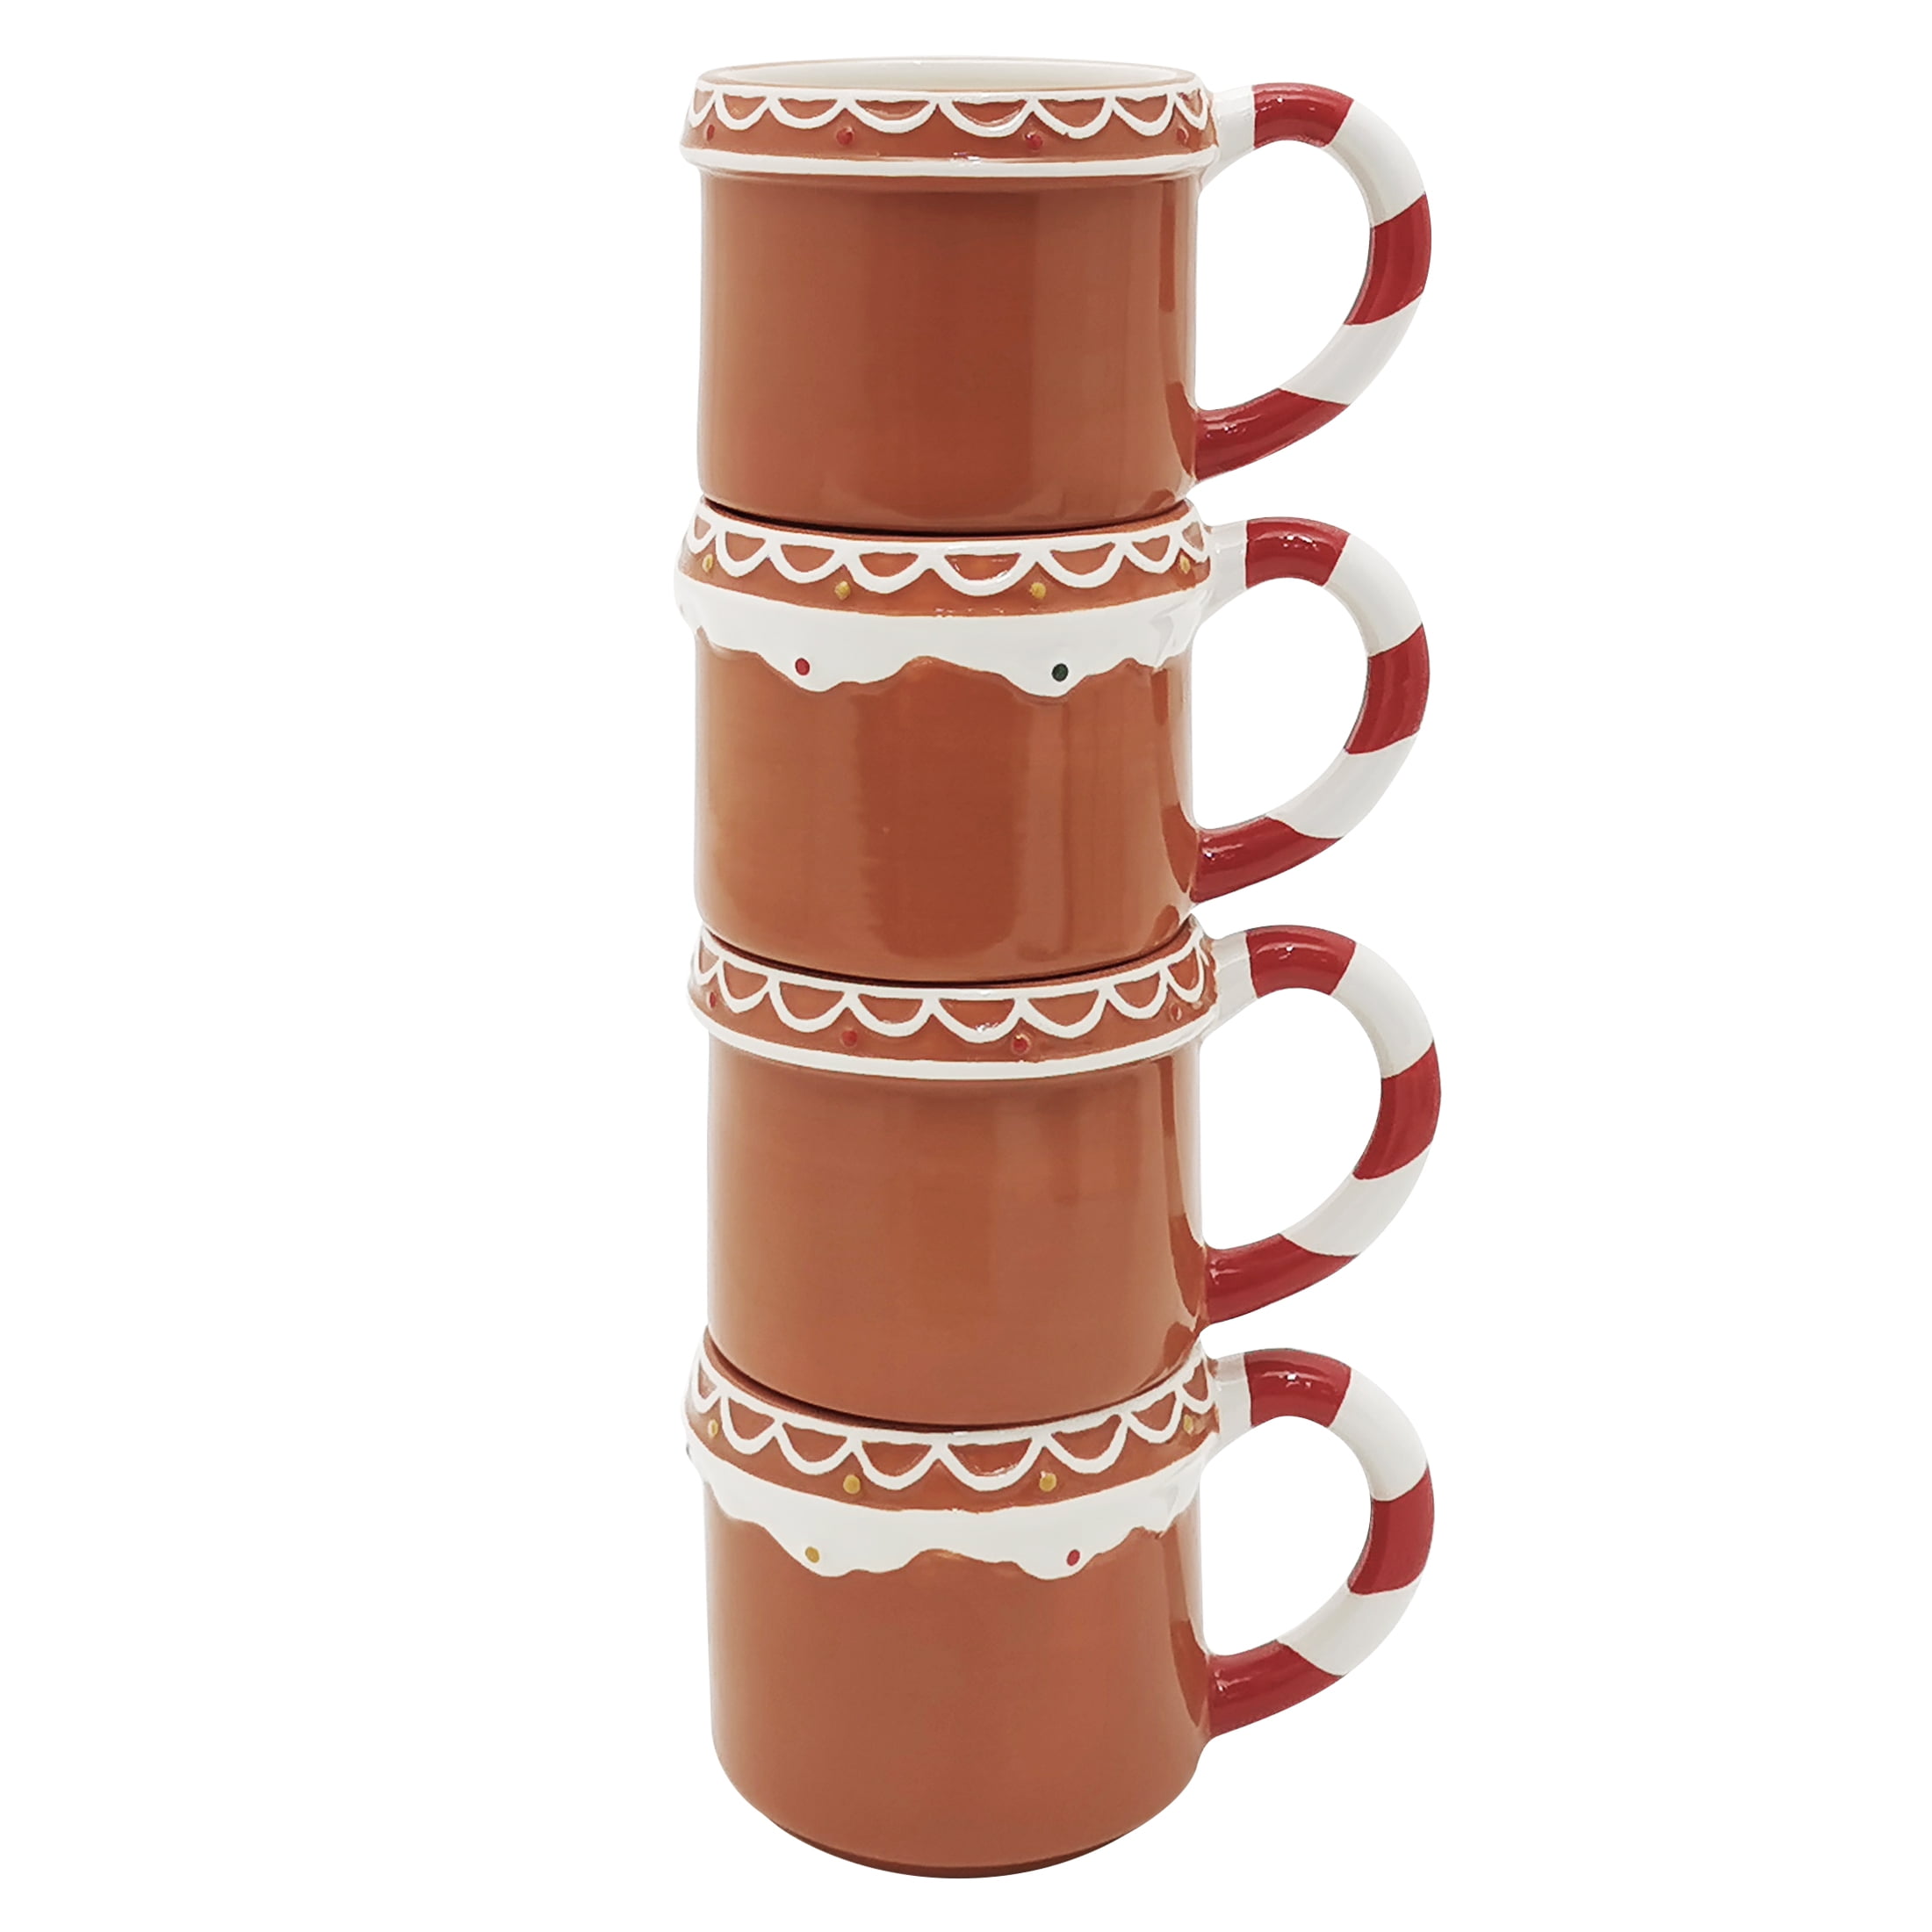 Merrilulu Gingerbread House Cups, 12 ct